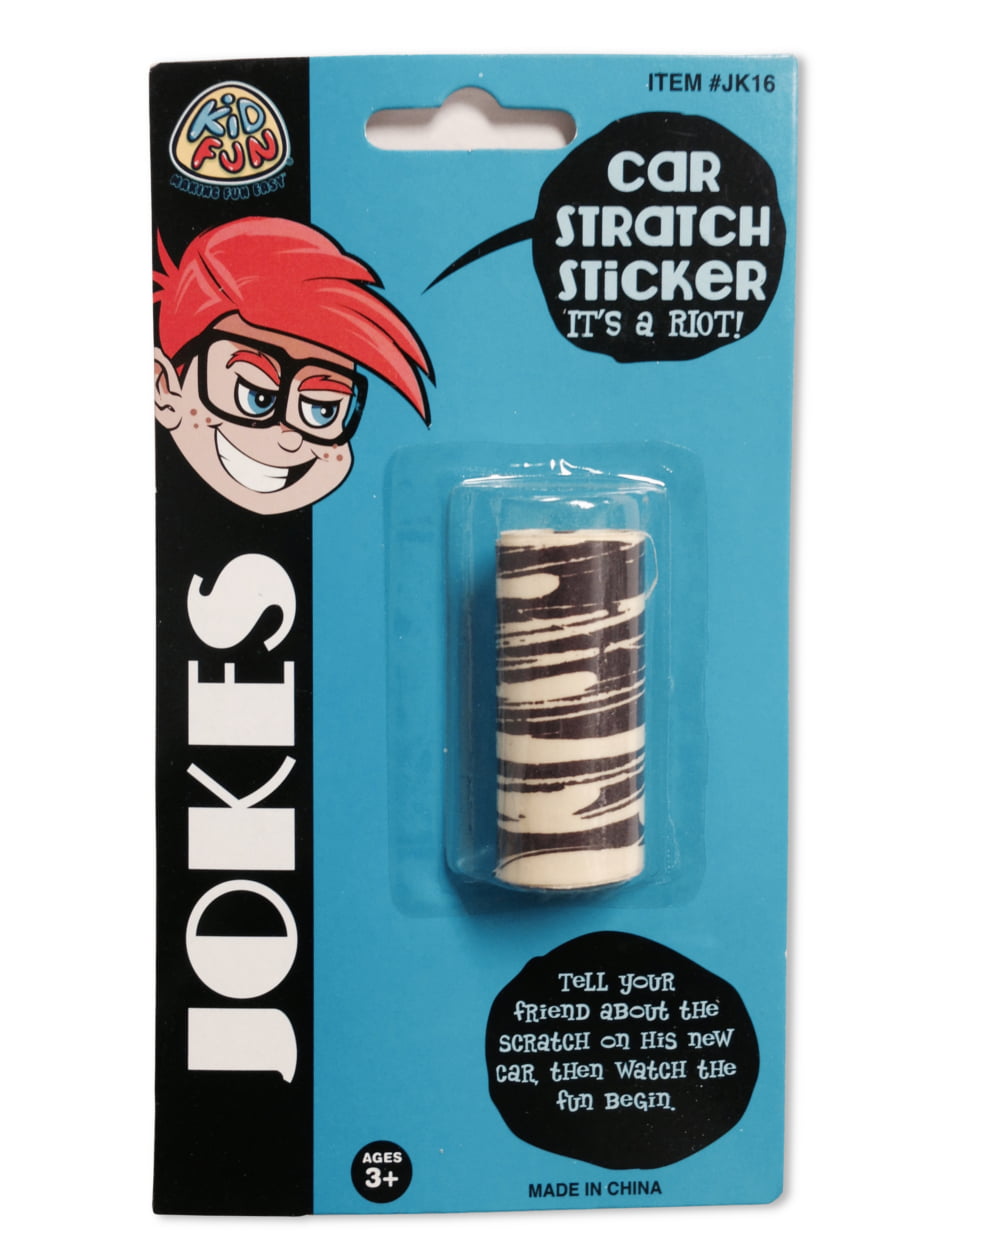 Details about   Fake Car Scratch Sticker Classic Joke & Prank Novelty Tricks 